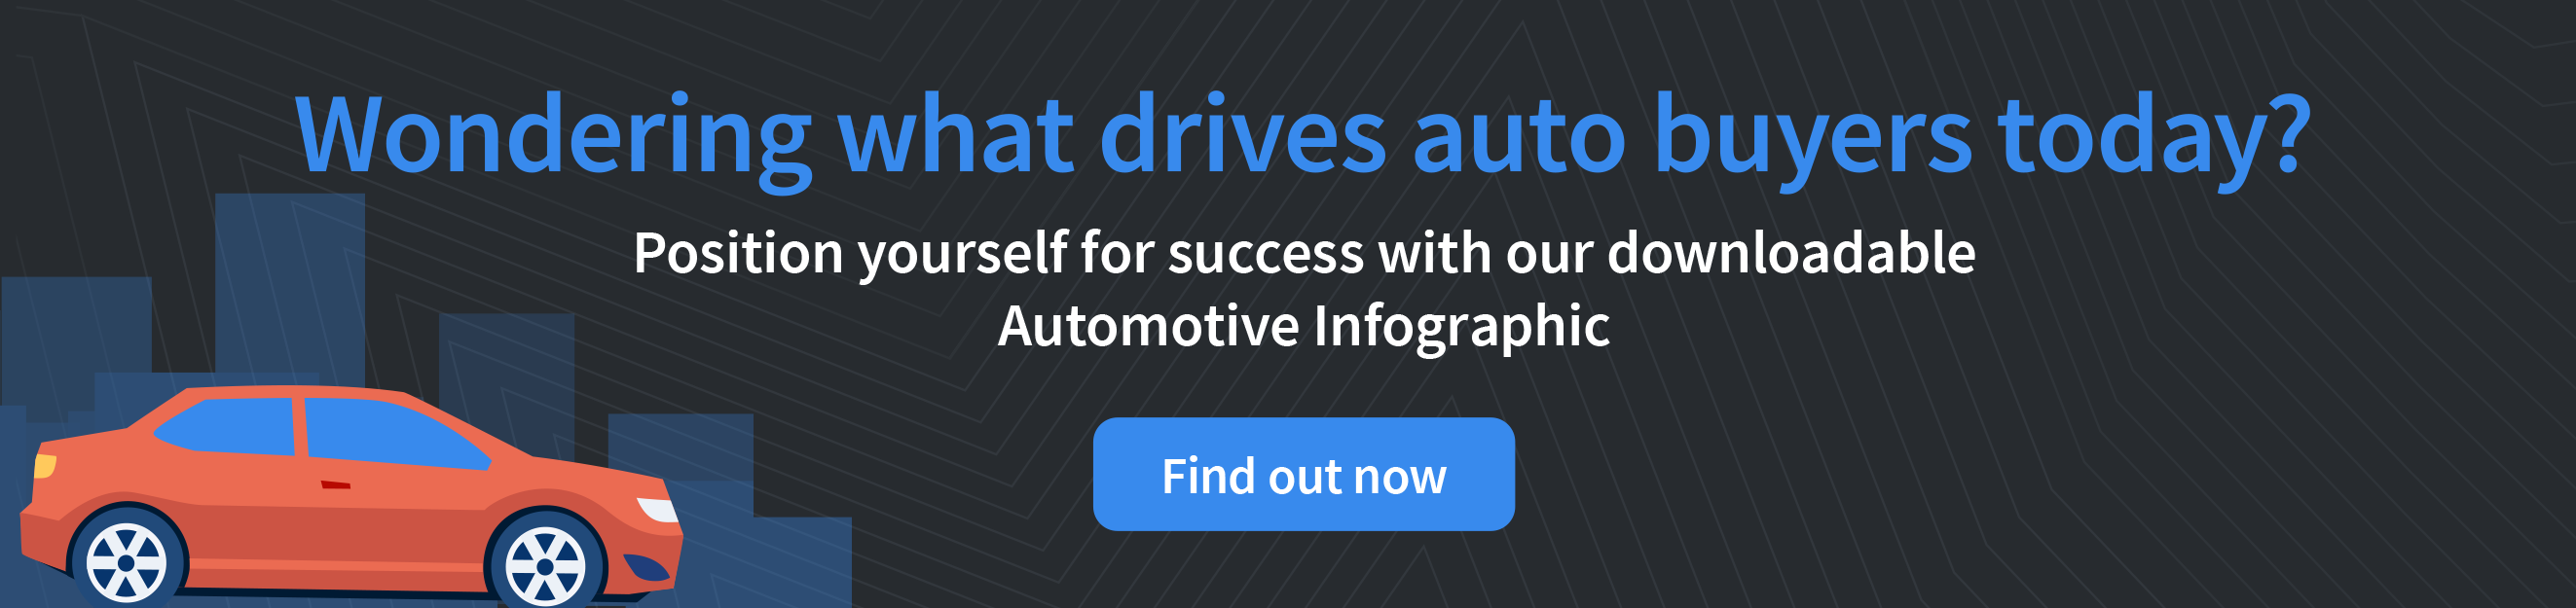 Automotive Infographic CTA